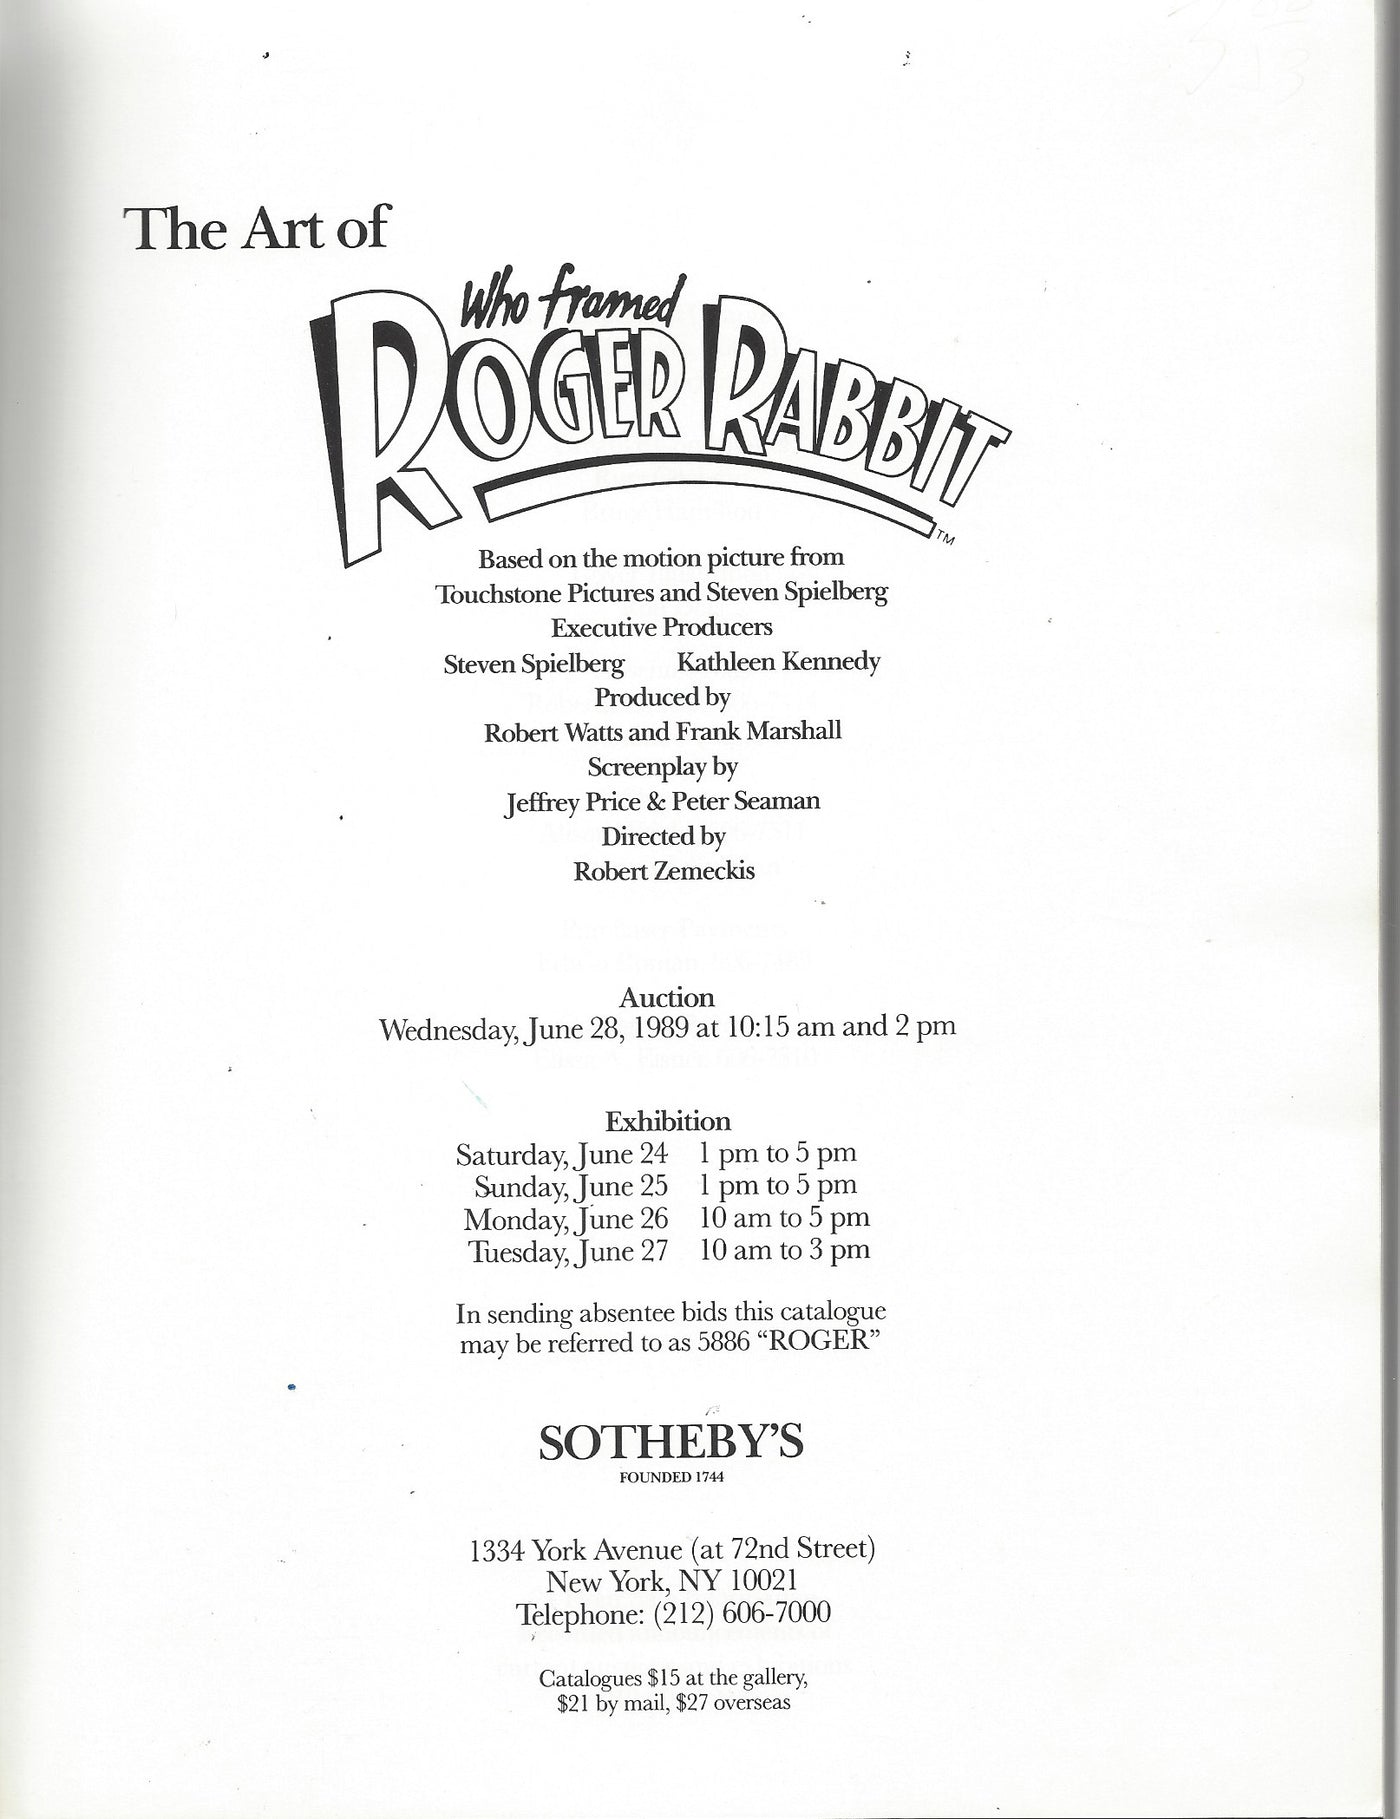 Original Walt Disney Production Cel from Who Framed Roger Rabbit?